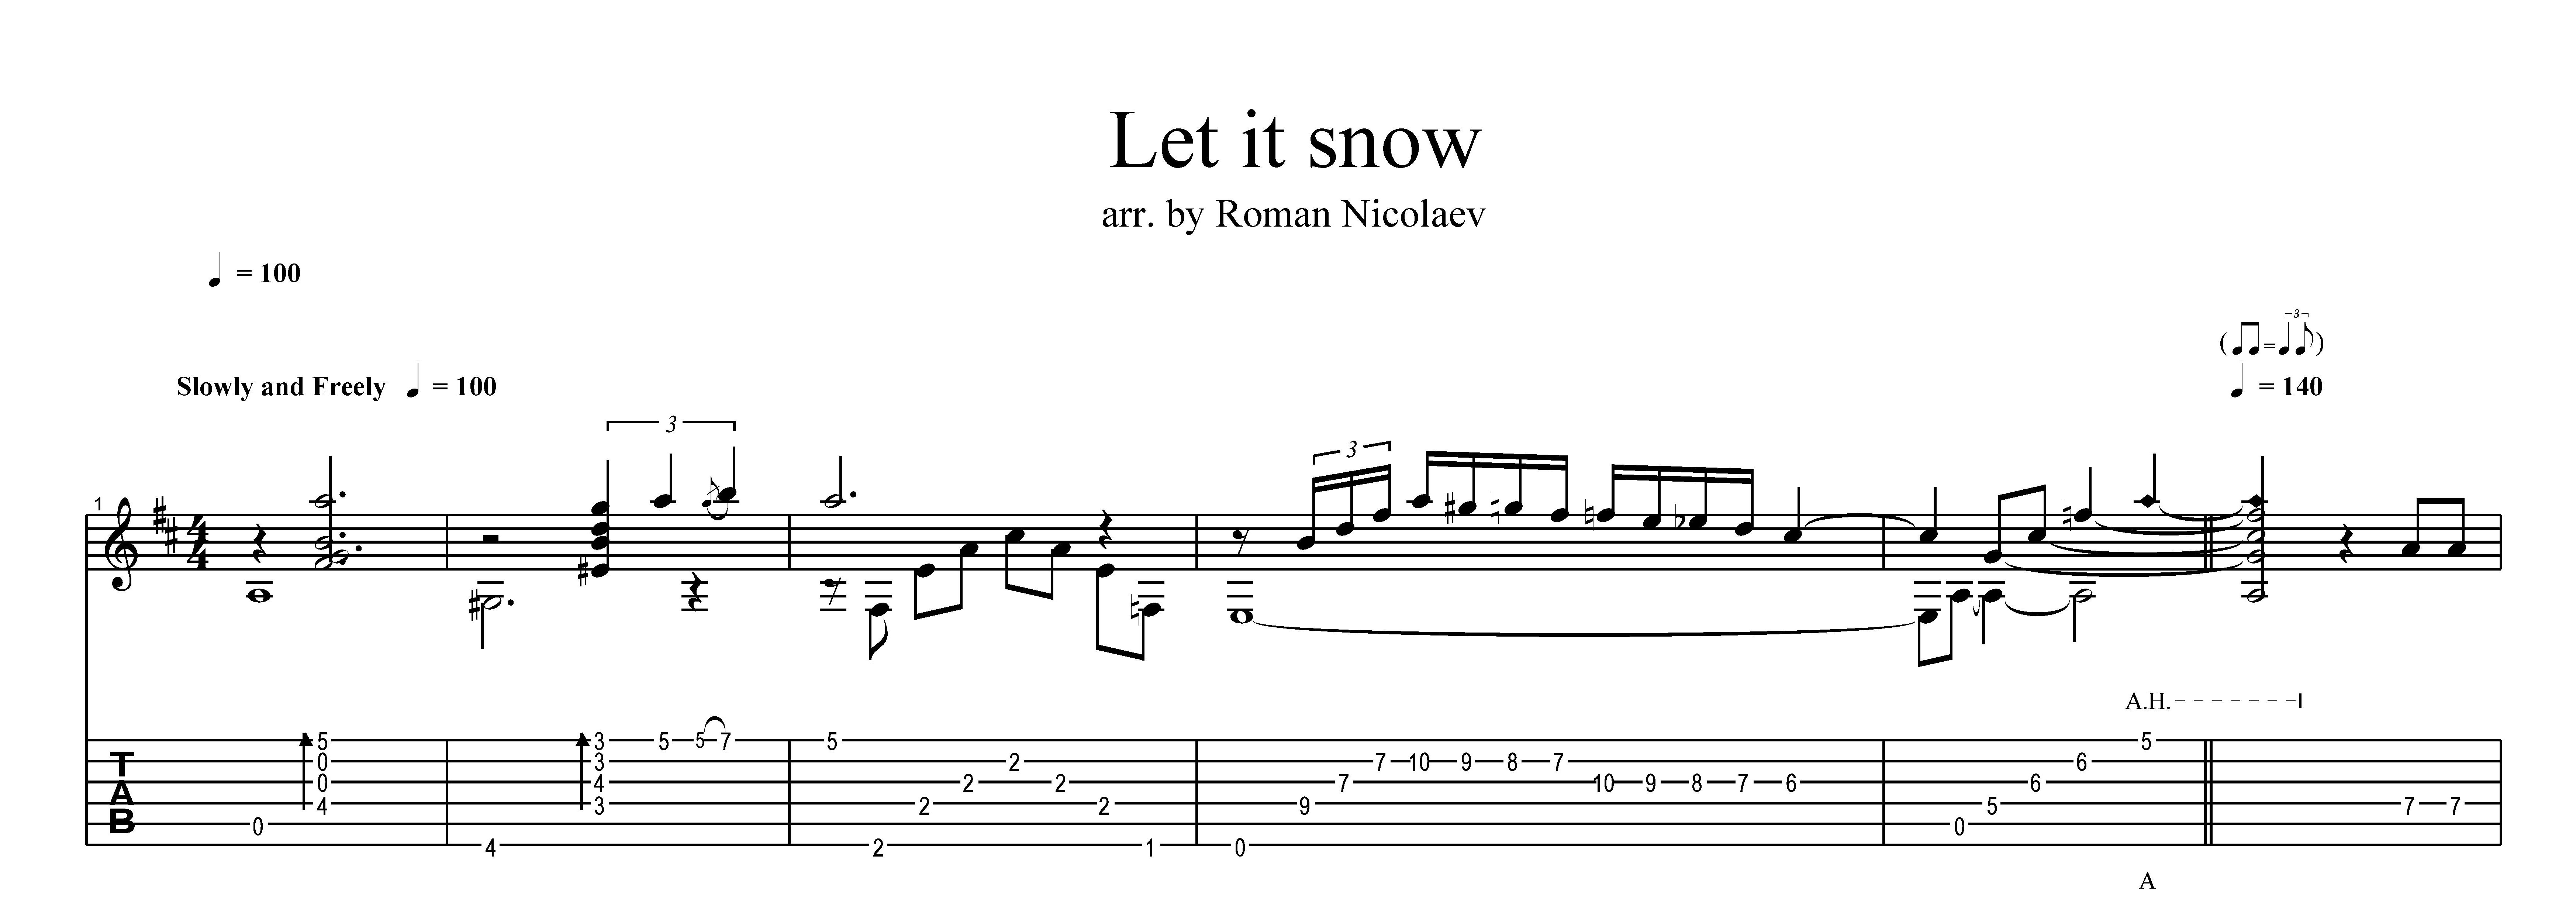 let it snow chords